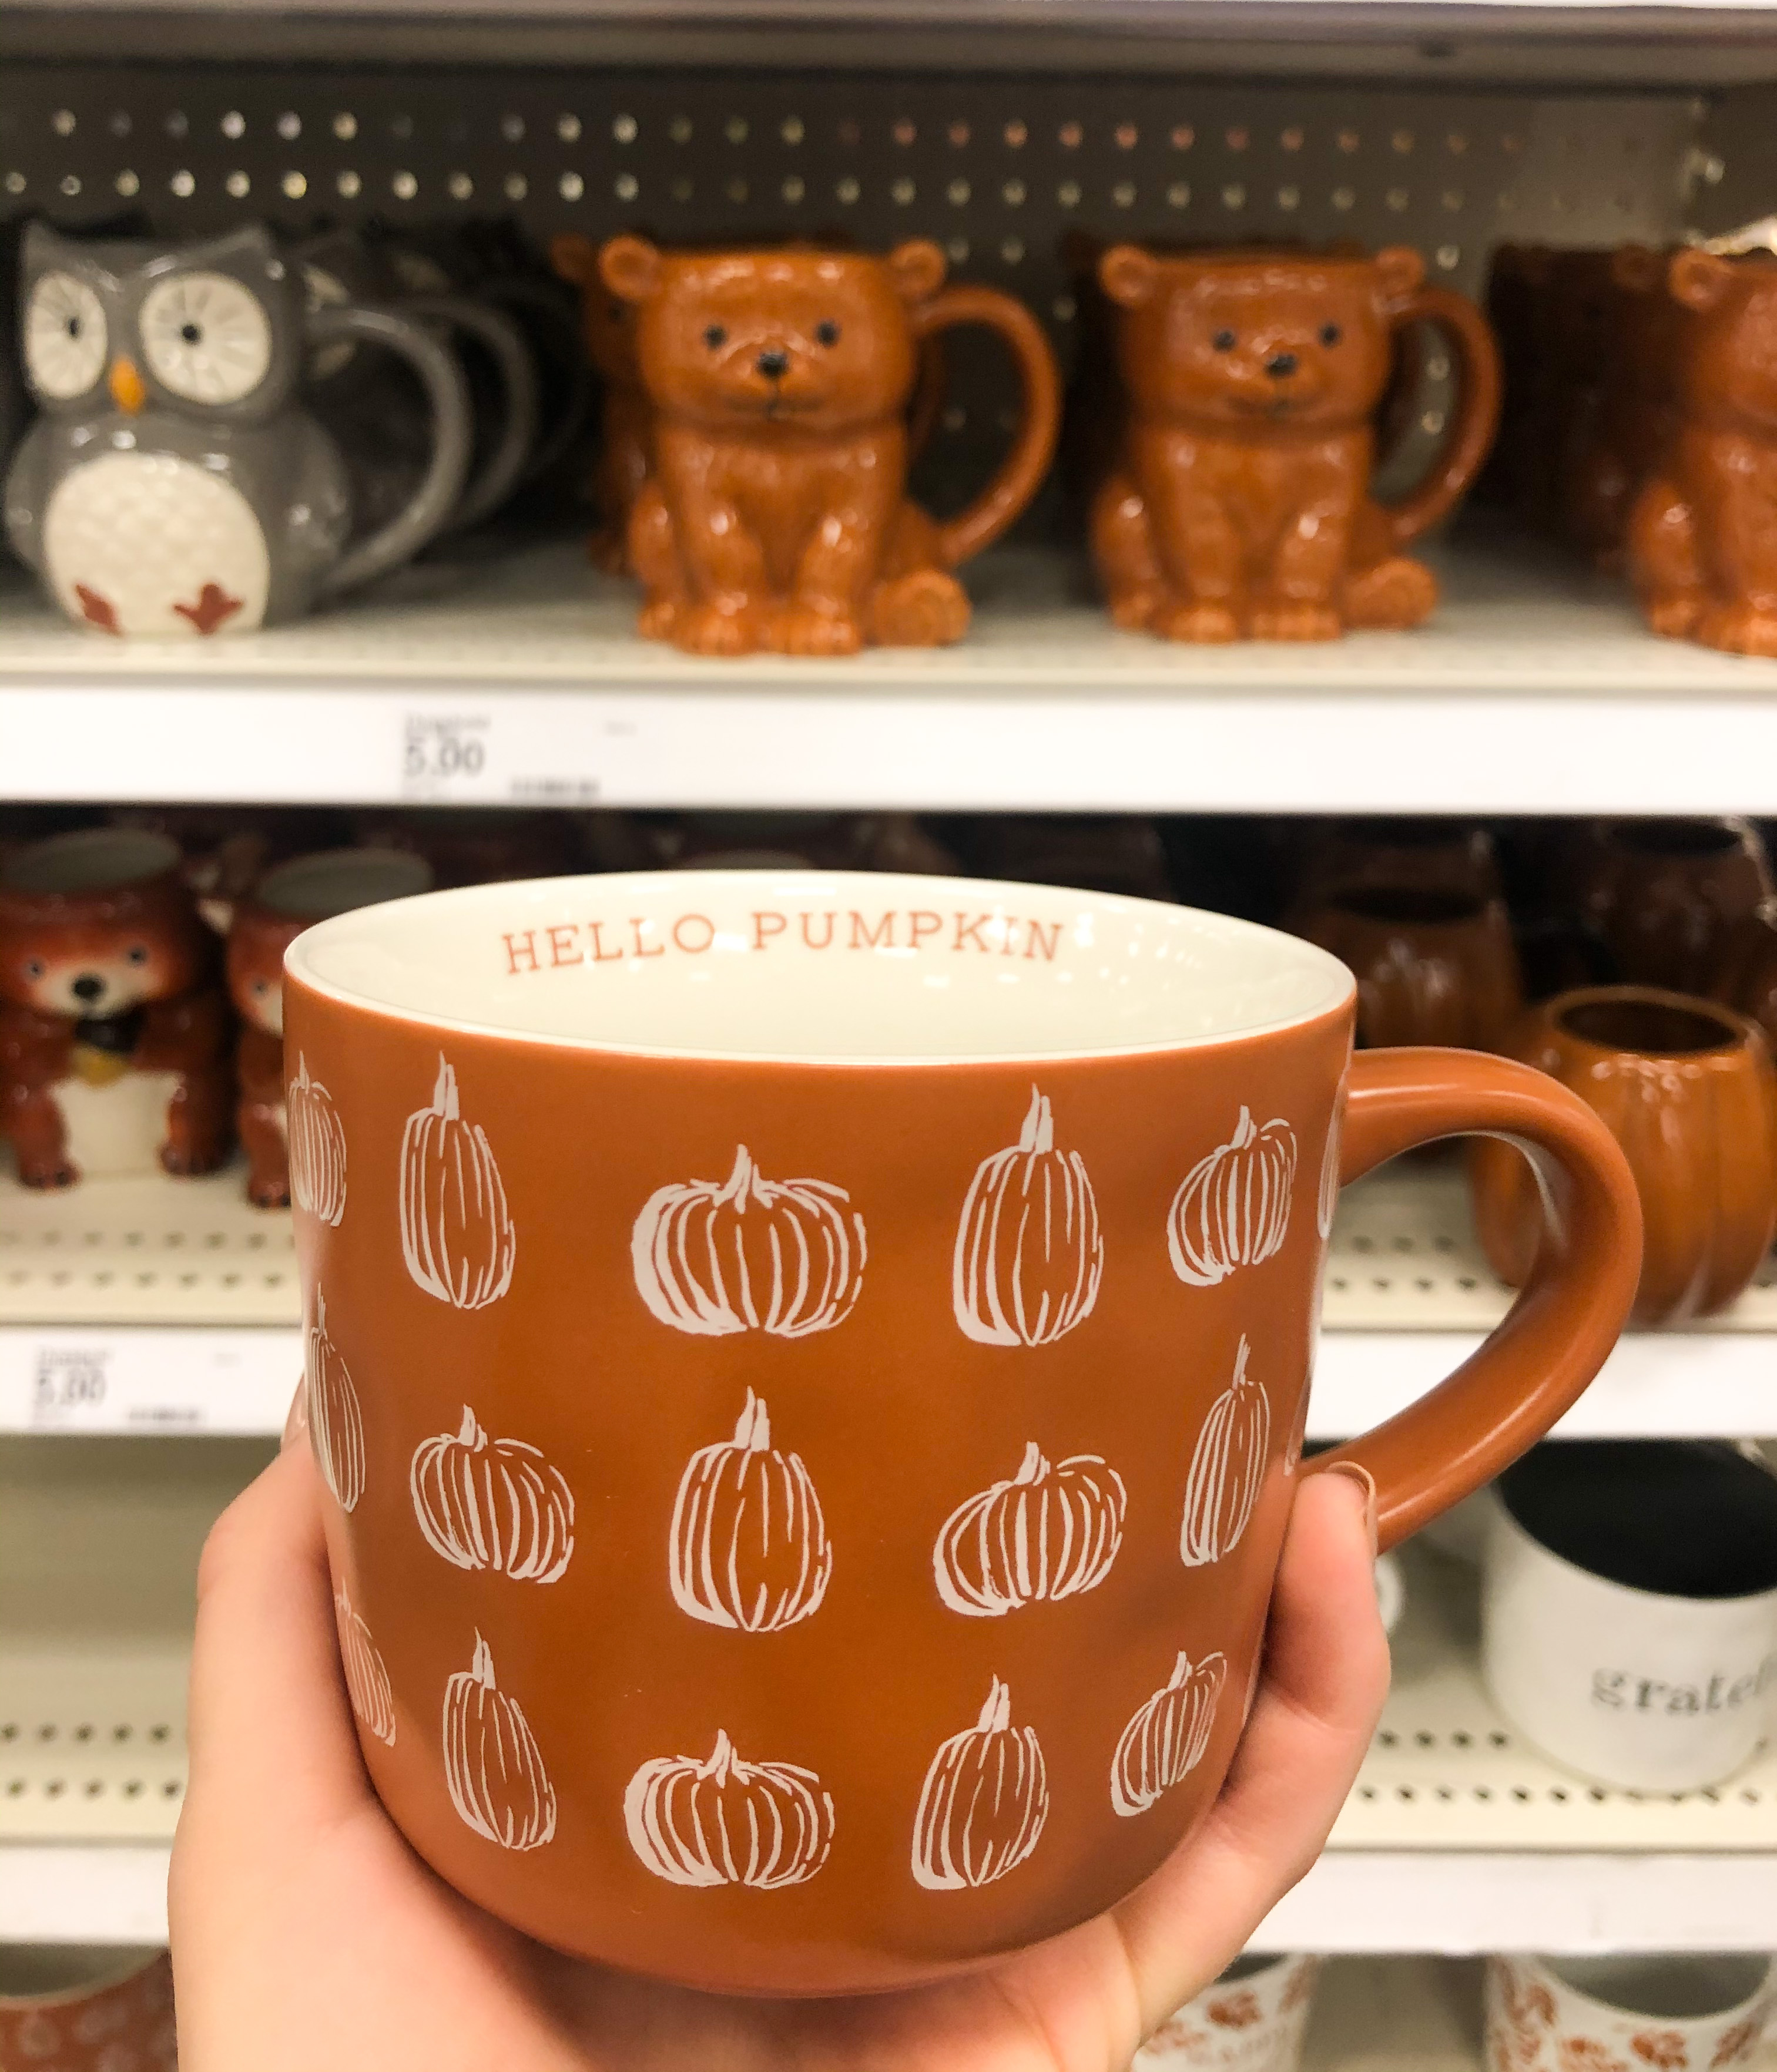 Hello pumpkin $5 fall mug.